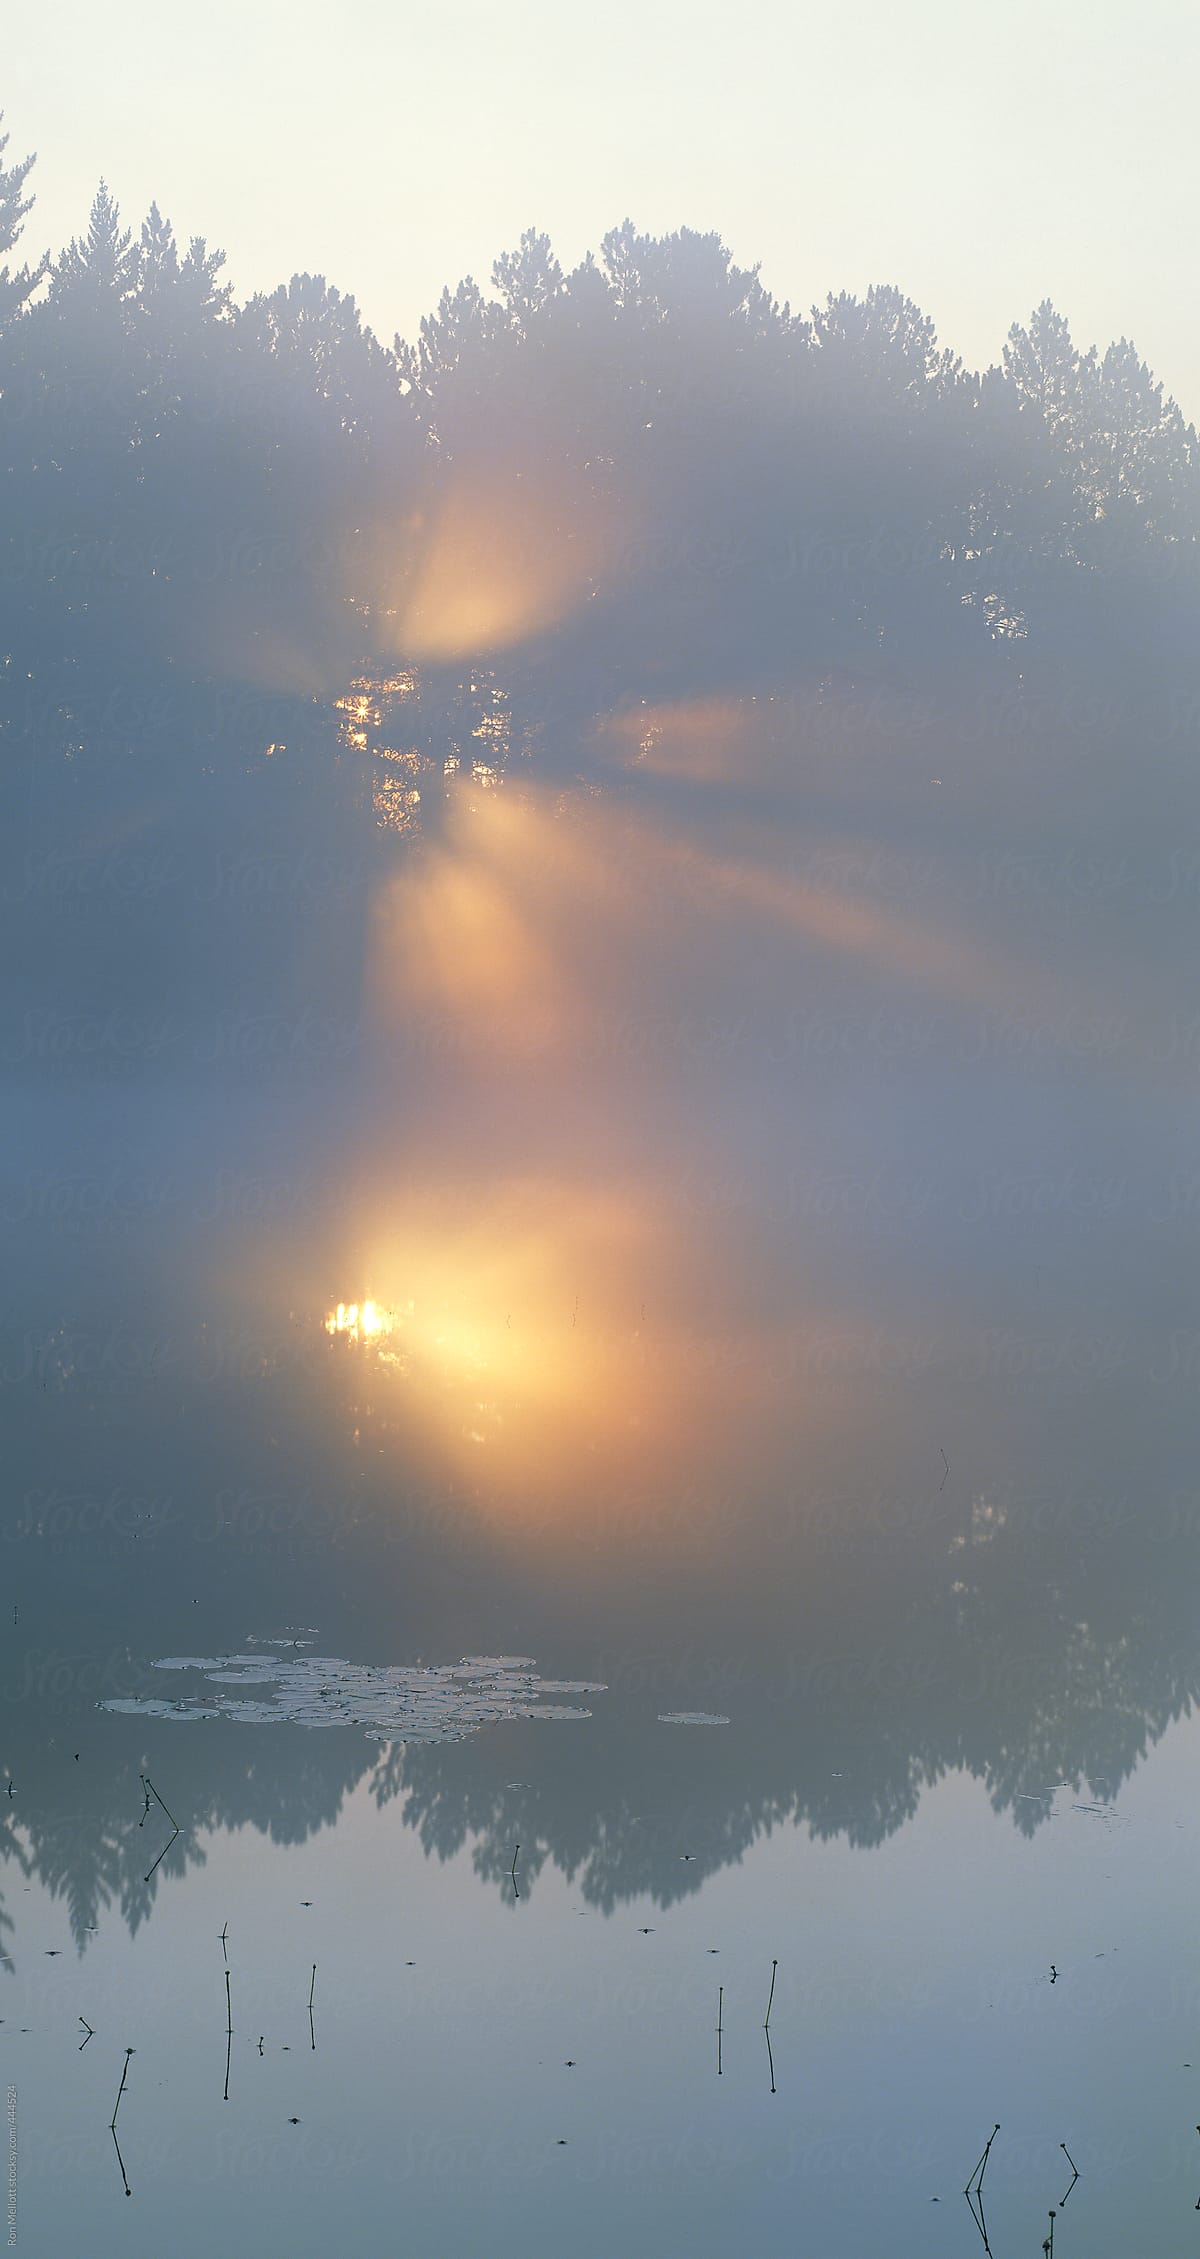 sunburst god rays through trees and fog reflecting off water surface